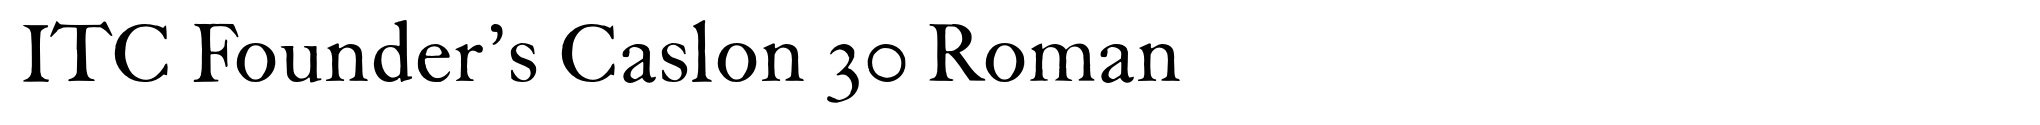 ITC Founder's Caslon 30 Roman image